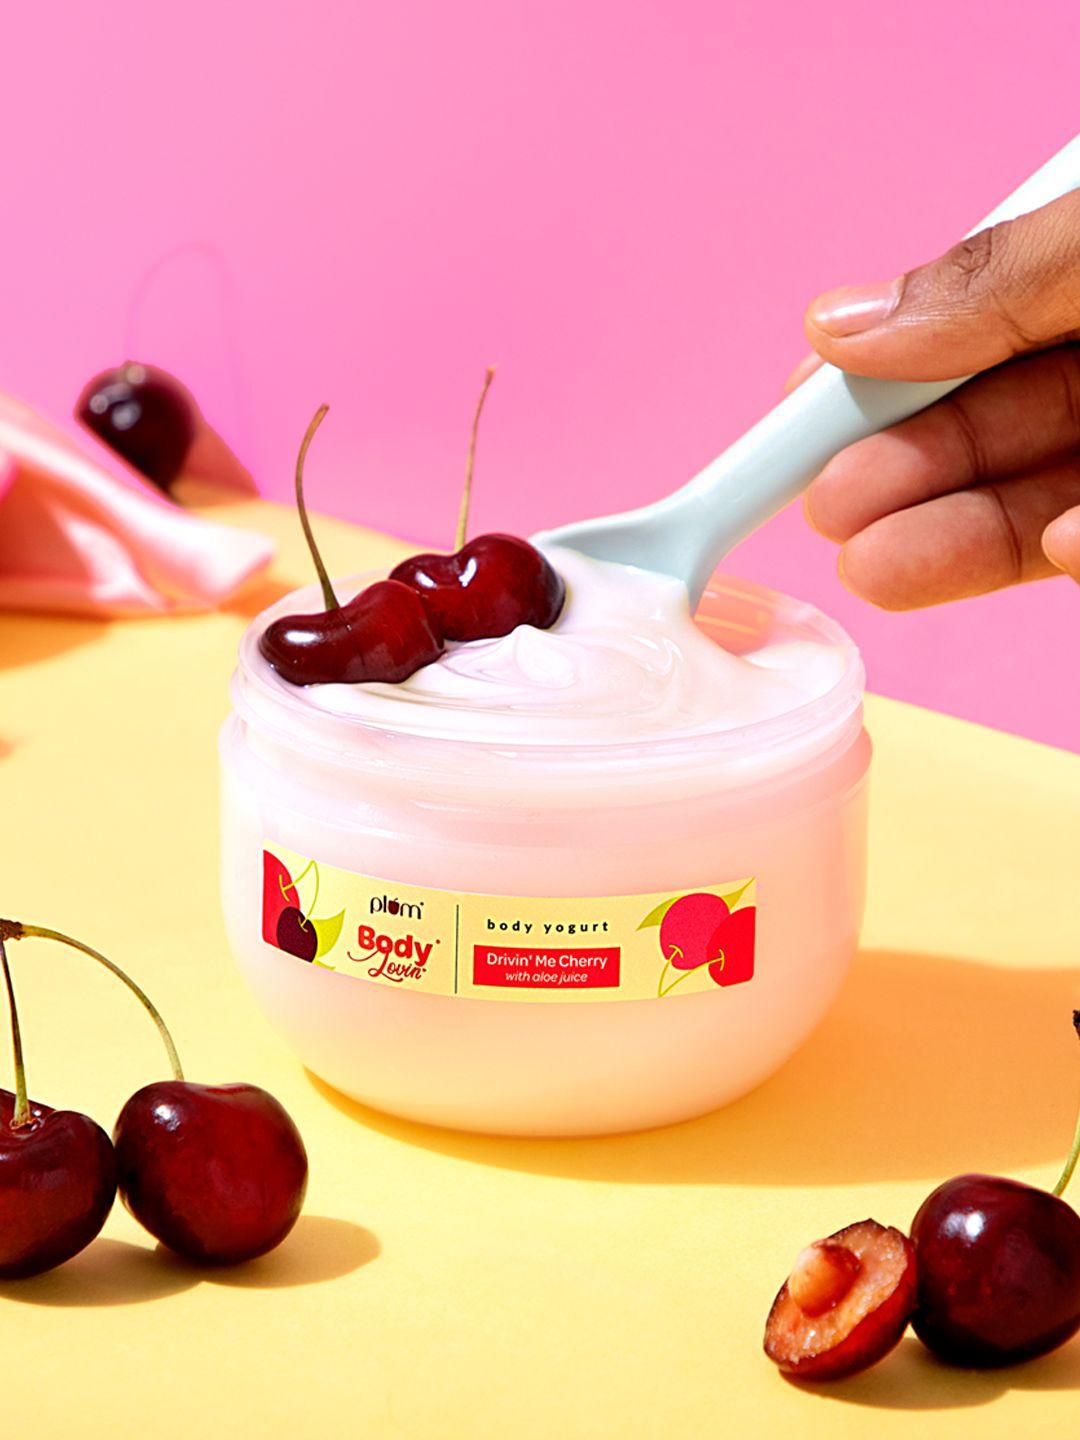 plum bodylovin drivin me cherry body yogurt - 250g